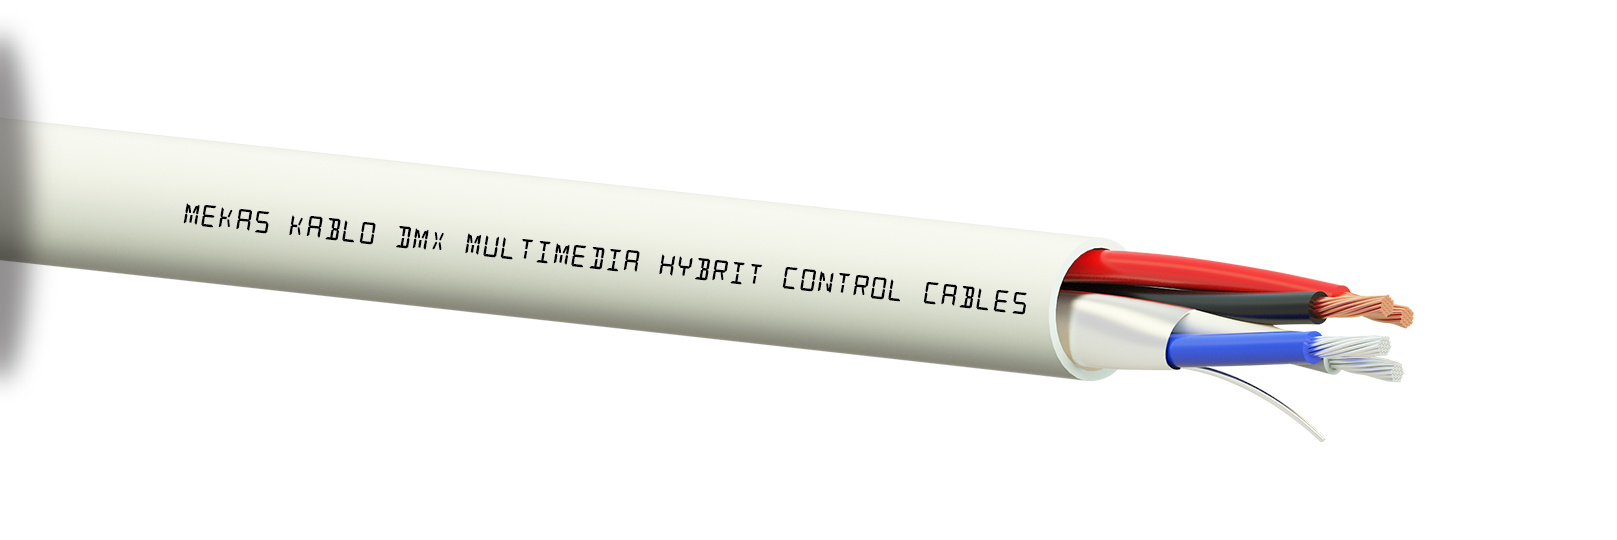 dmx hibrit kontrol kablo